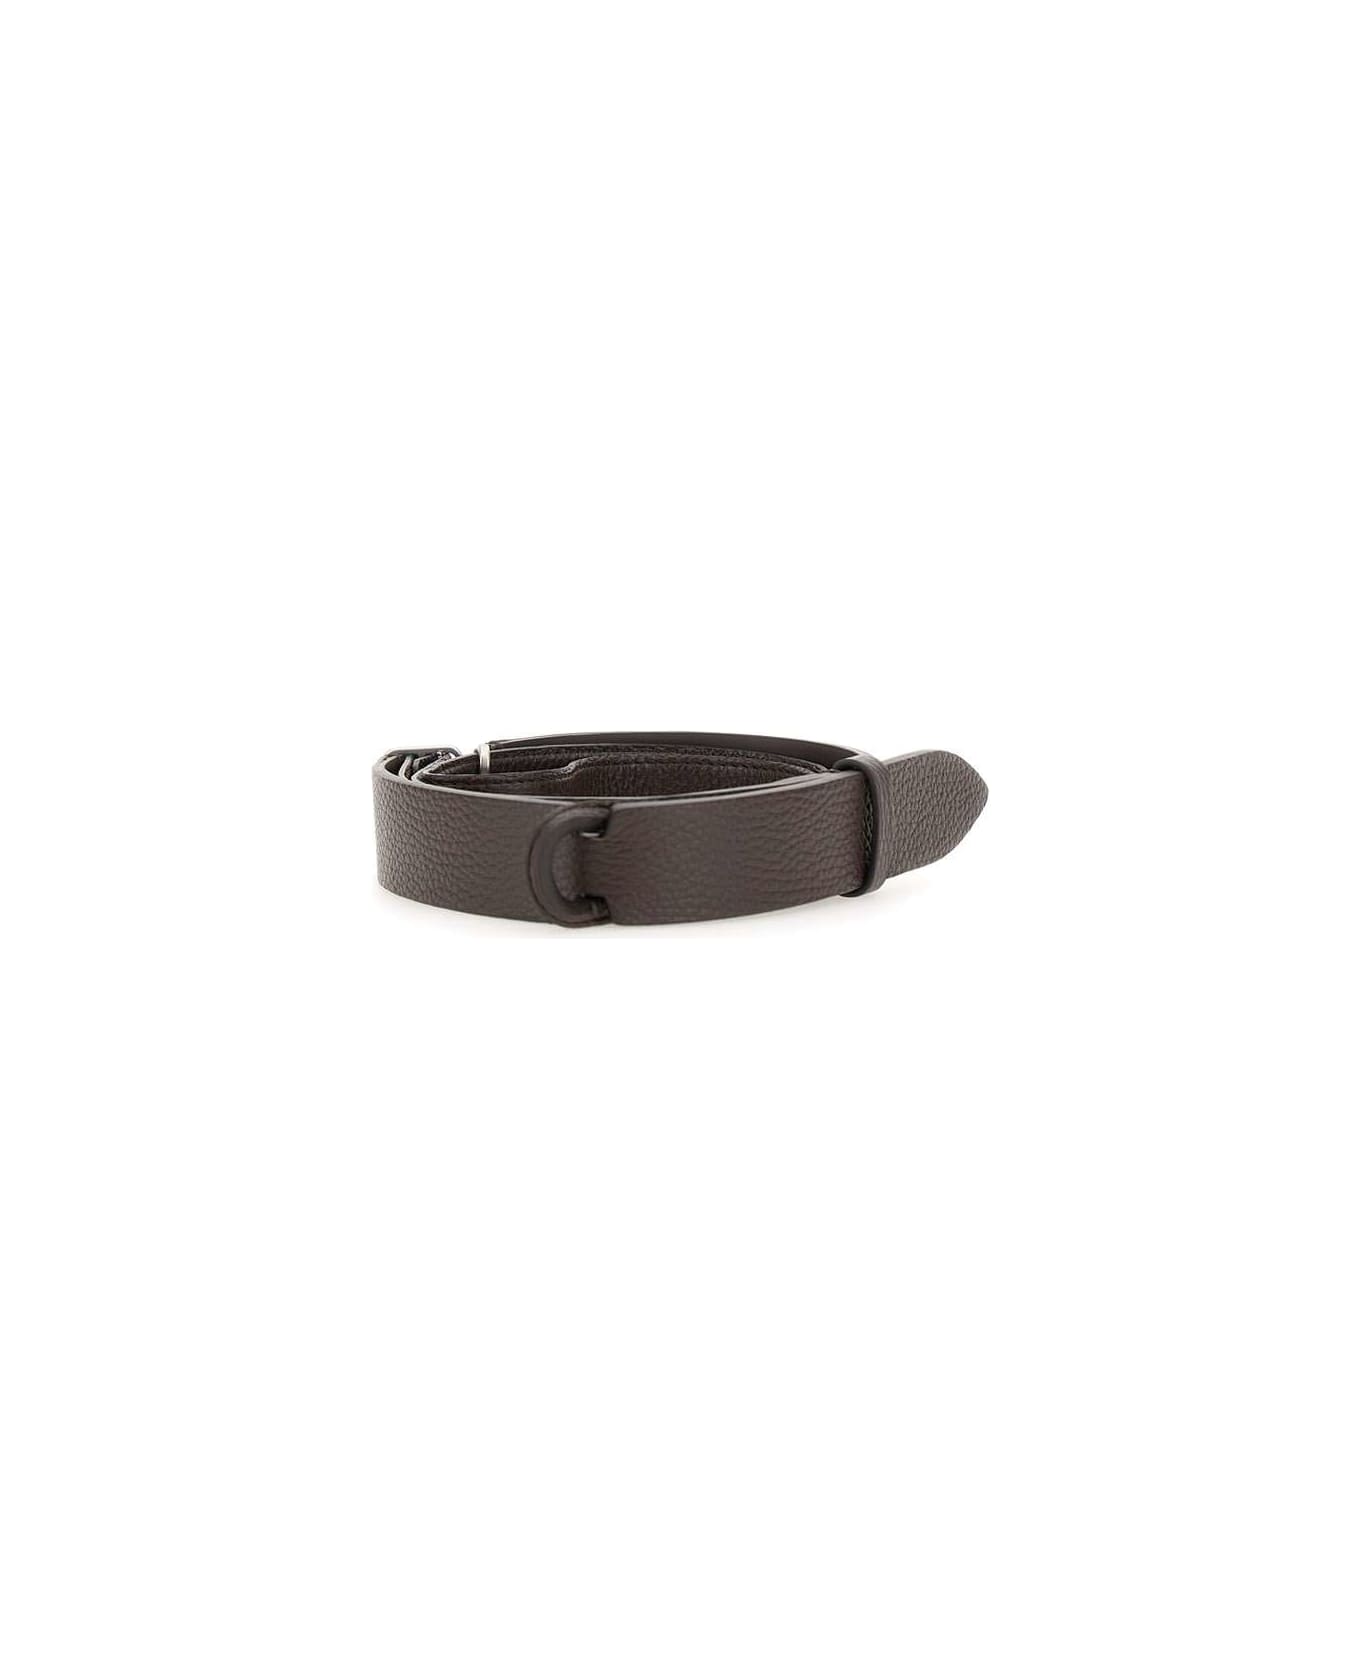 Orciani "nobukle Micron" Leather Belt - BROWN ベルト